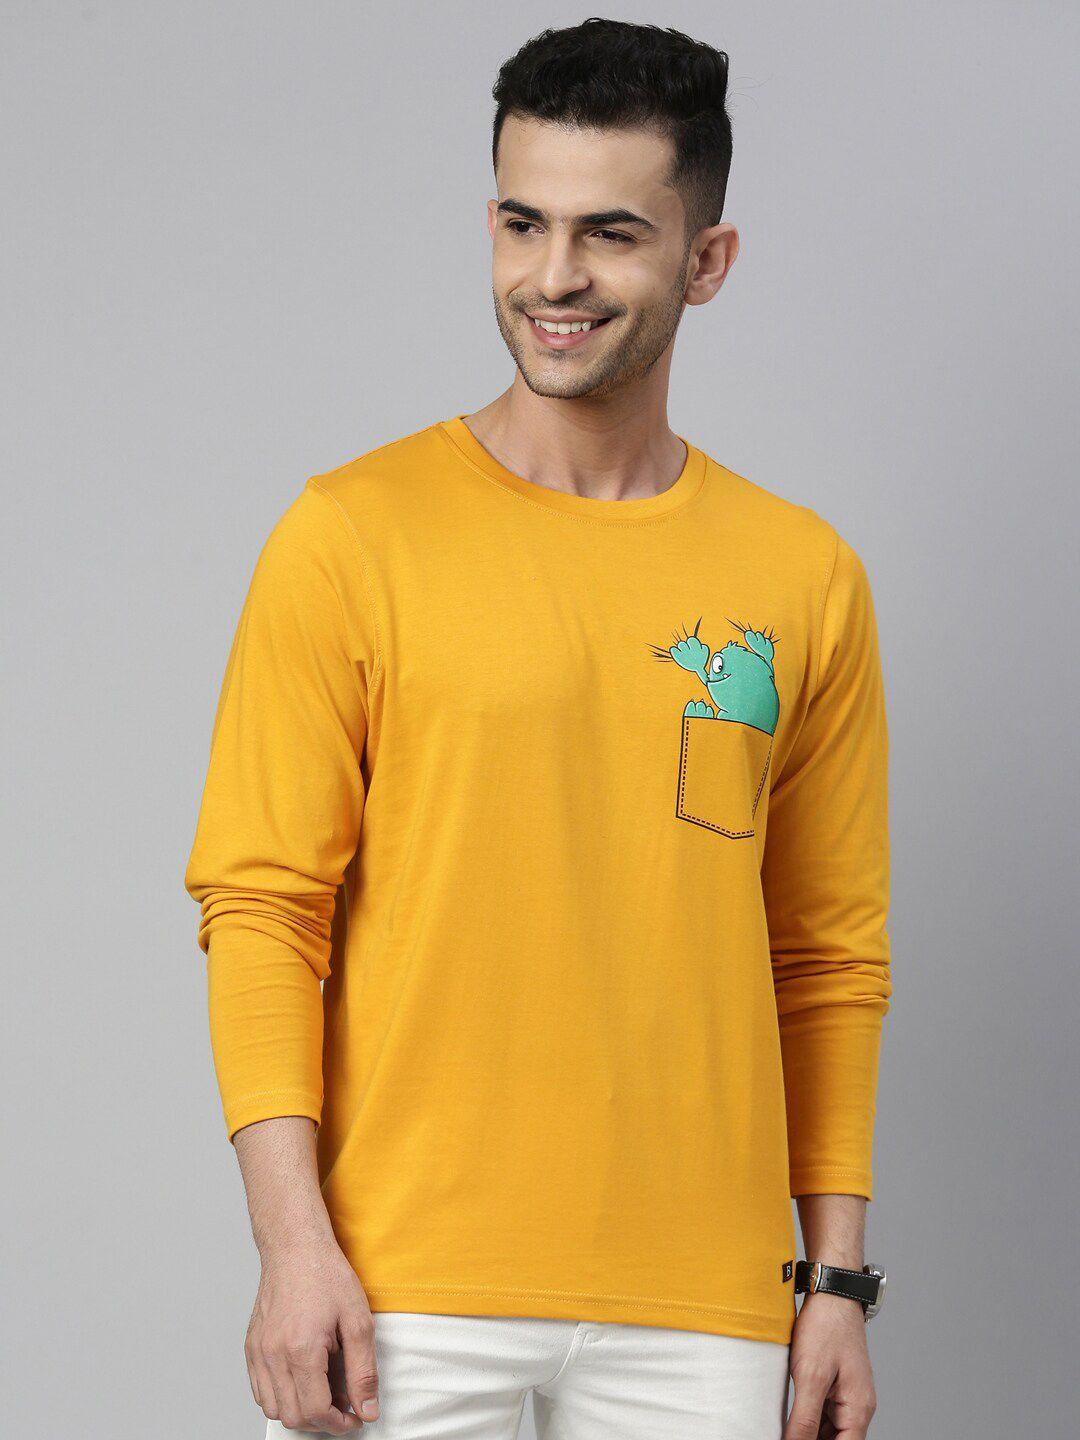 bushirt men mustard yellow placement printed t-shirt